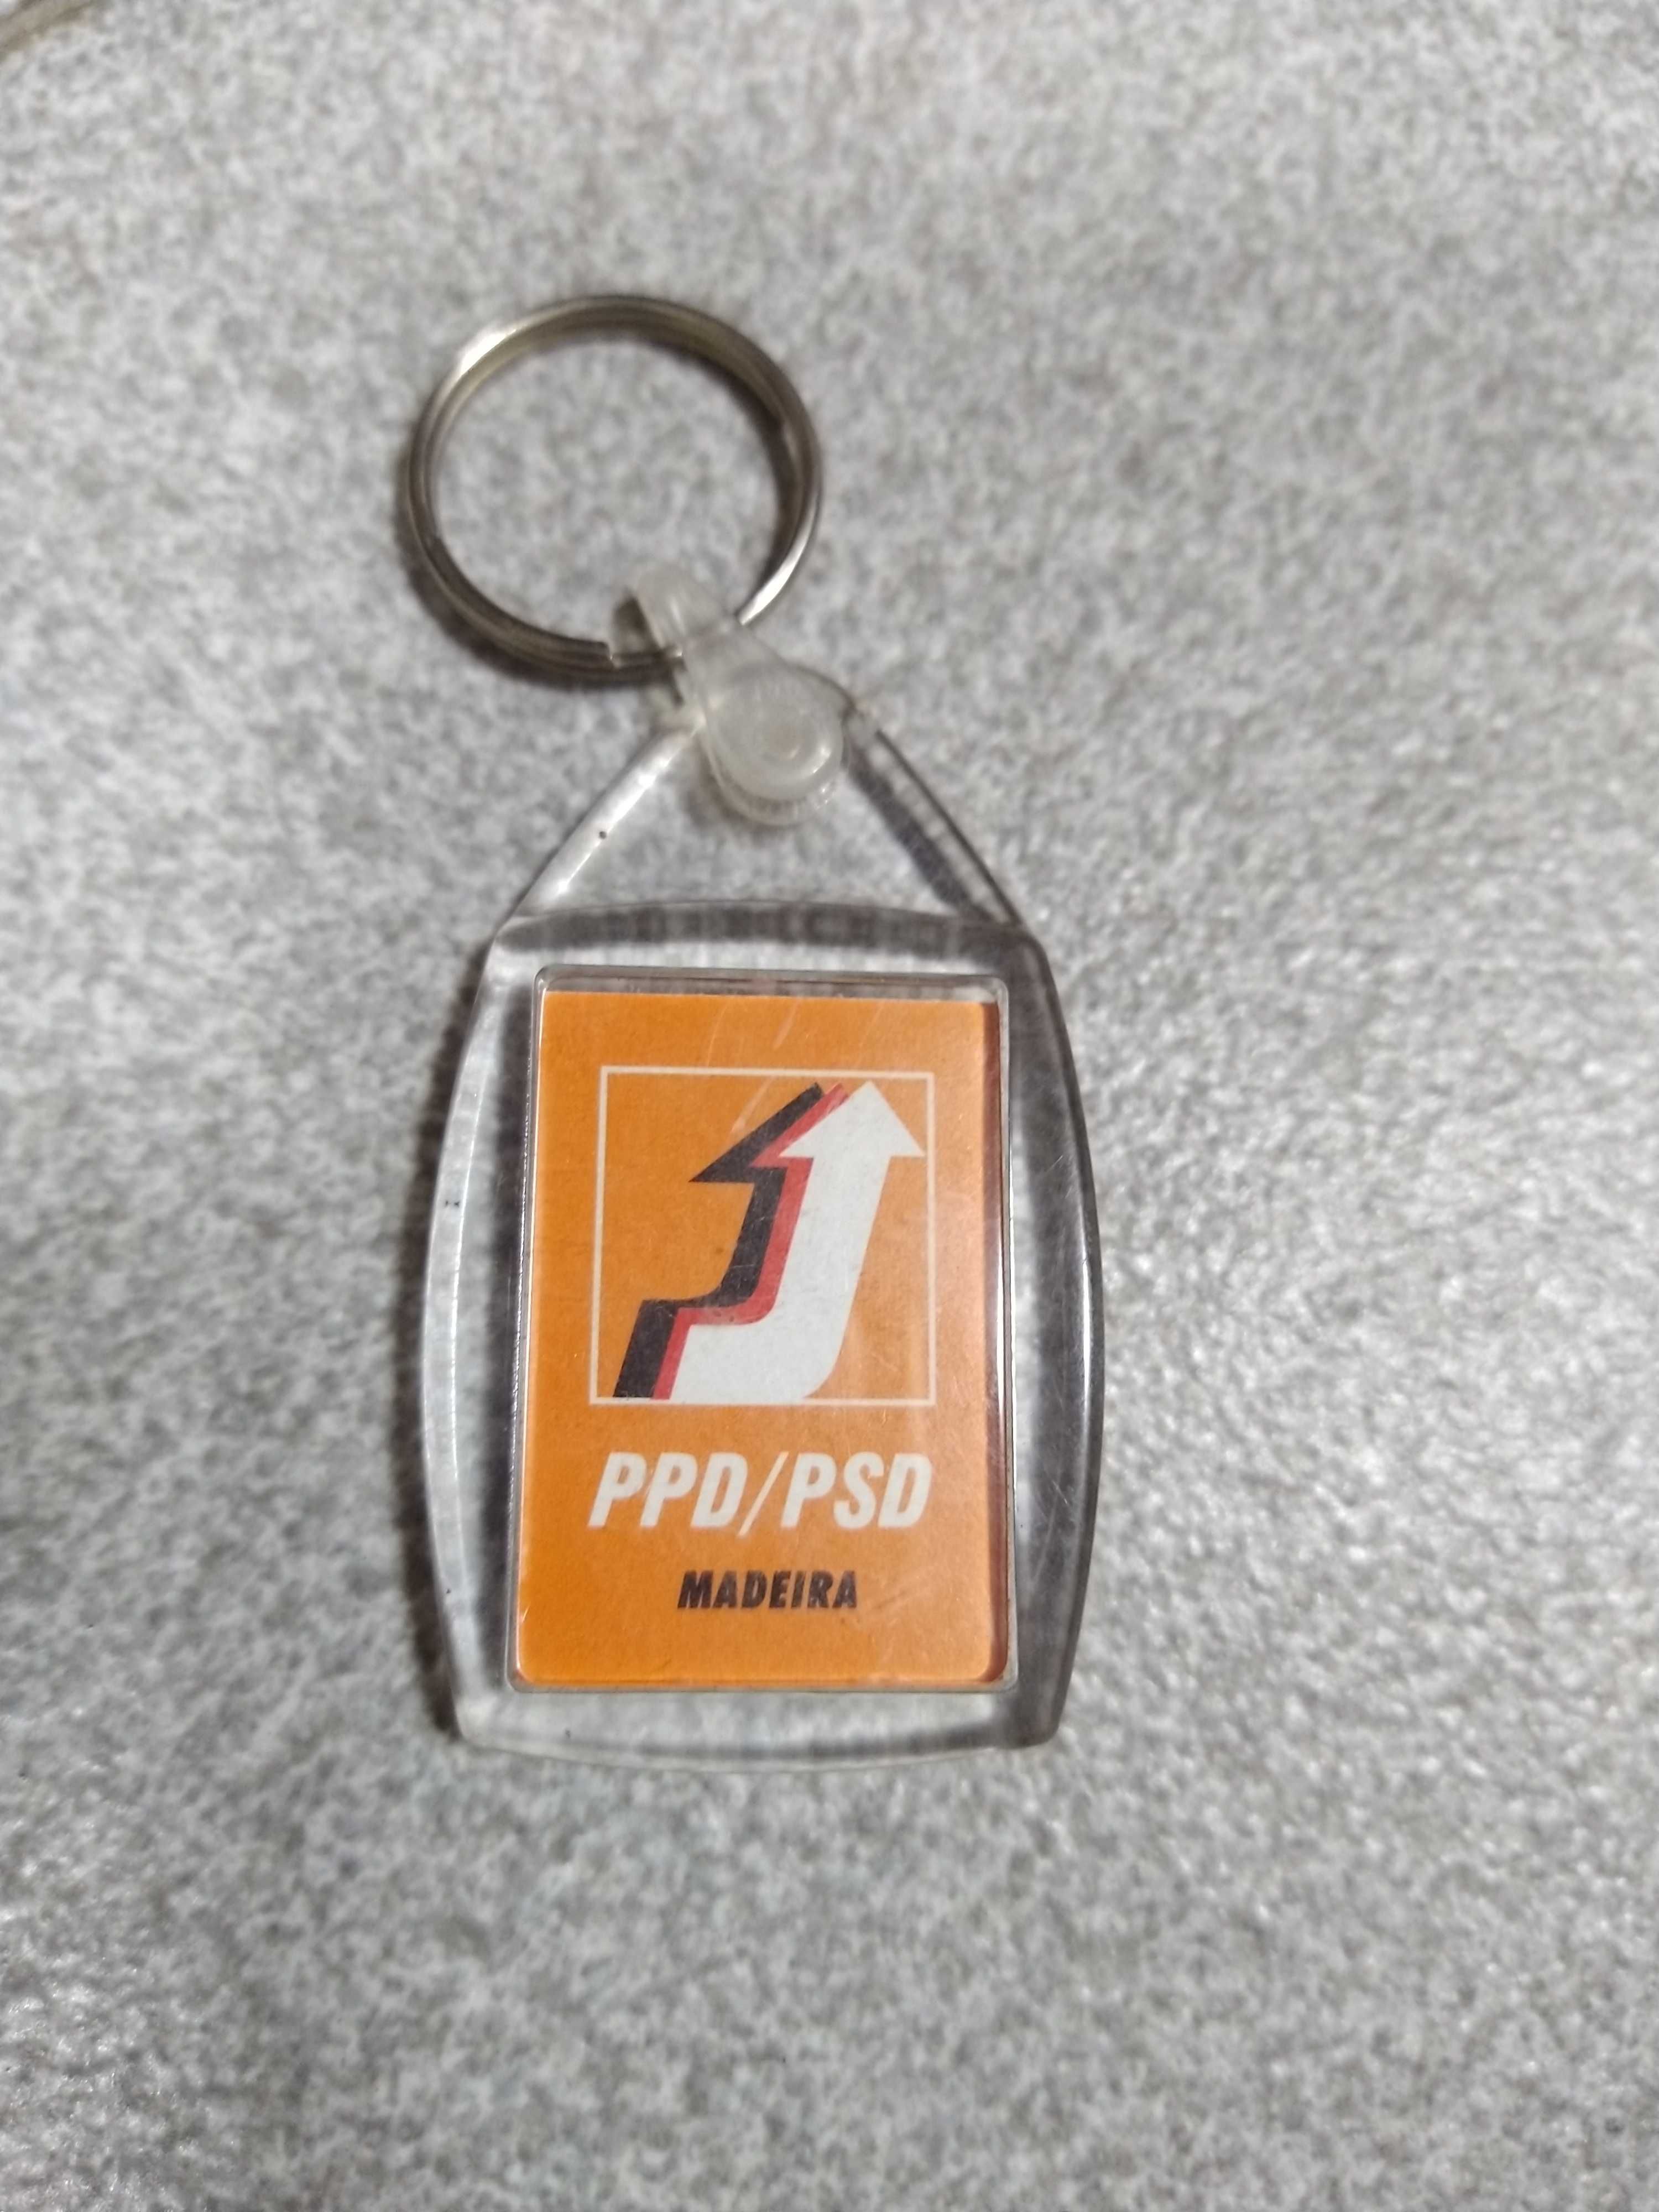 Porta chaves do PPD / PSD Madeira - Anos 90